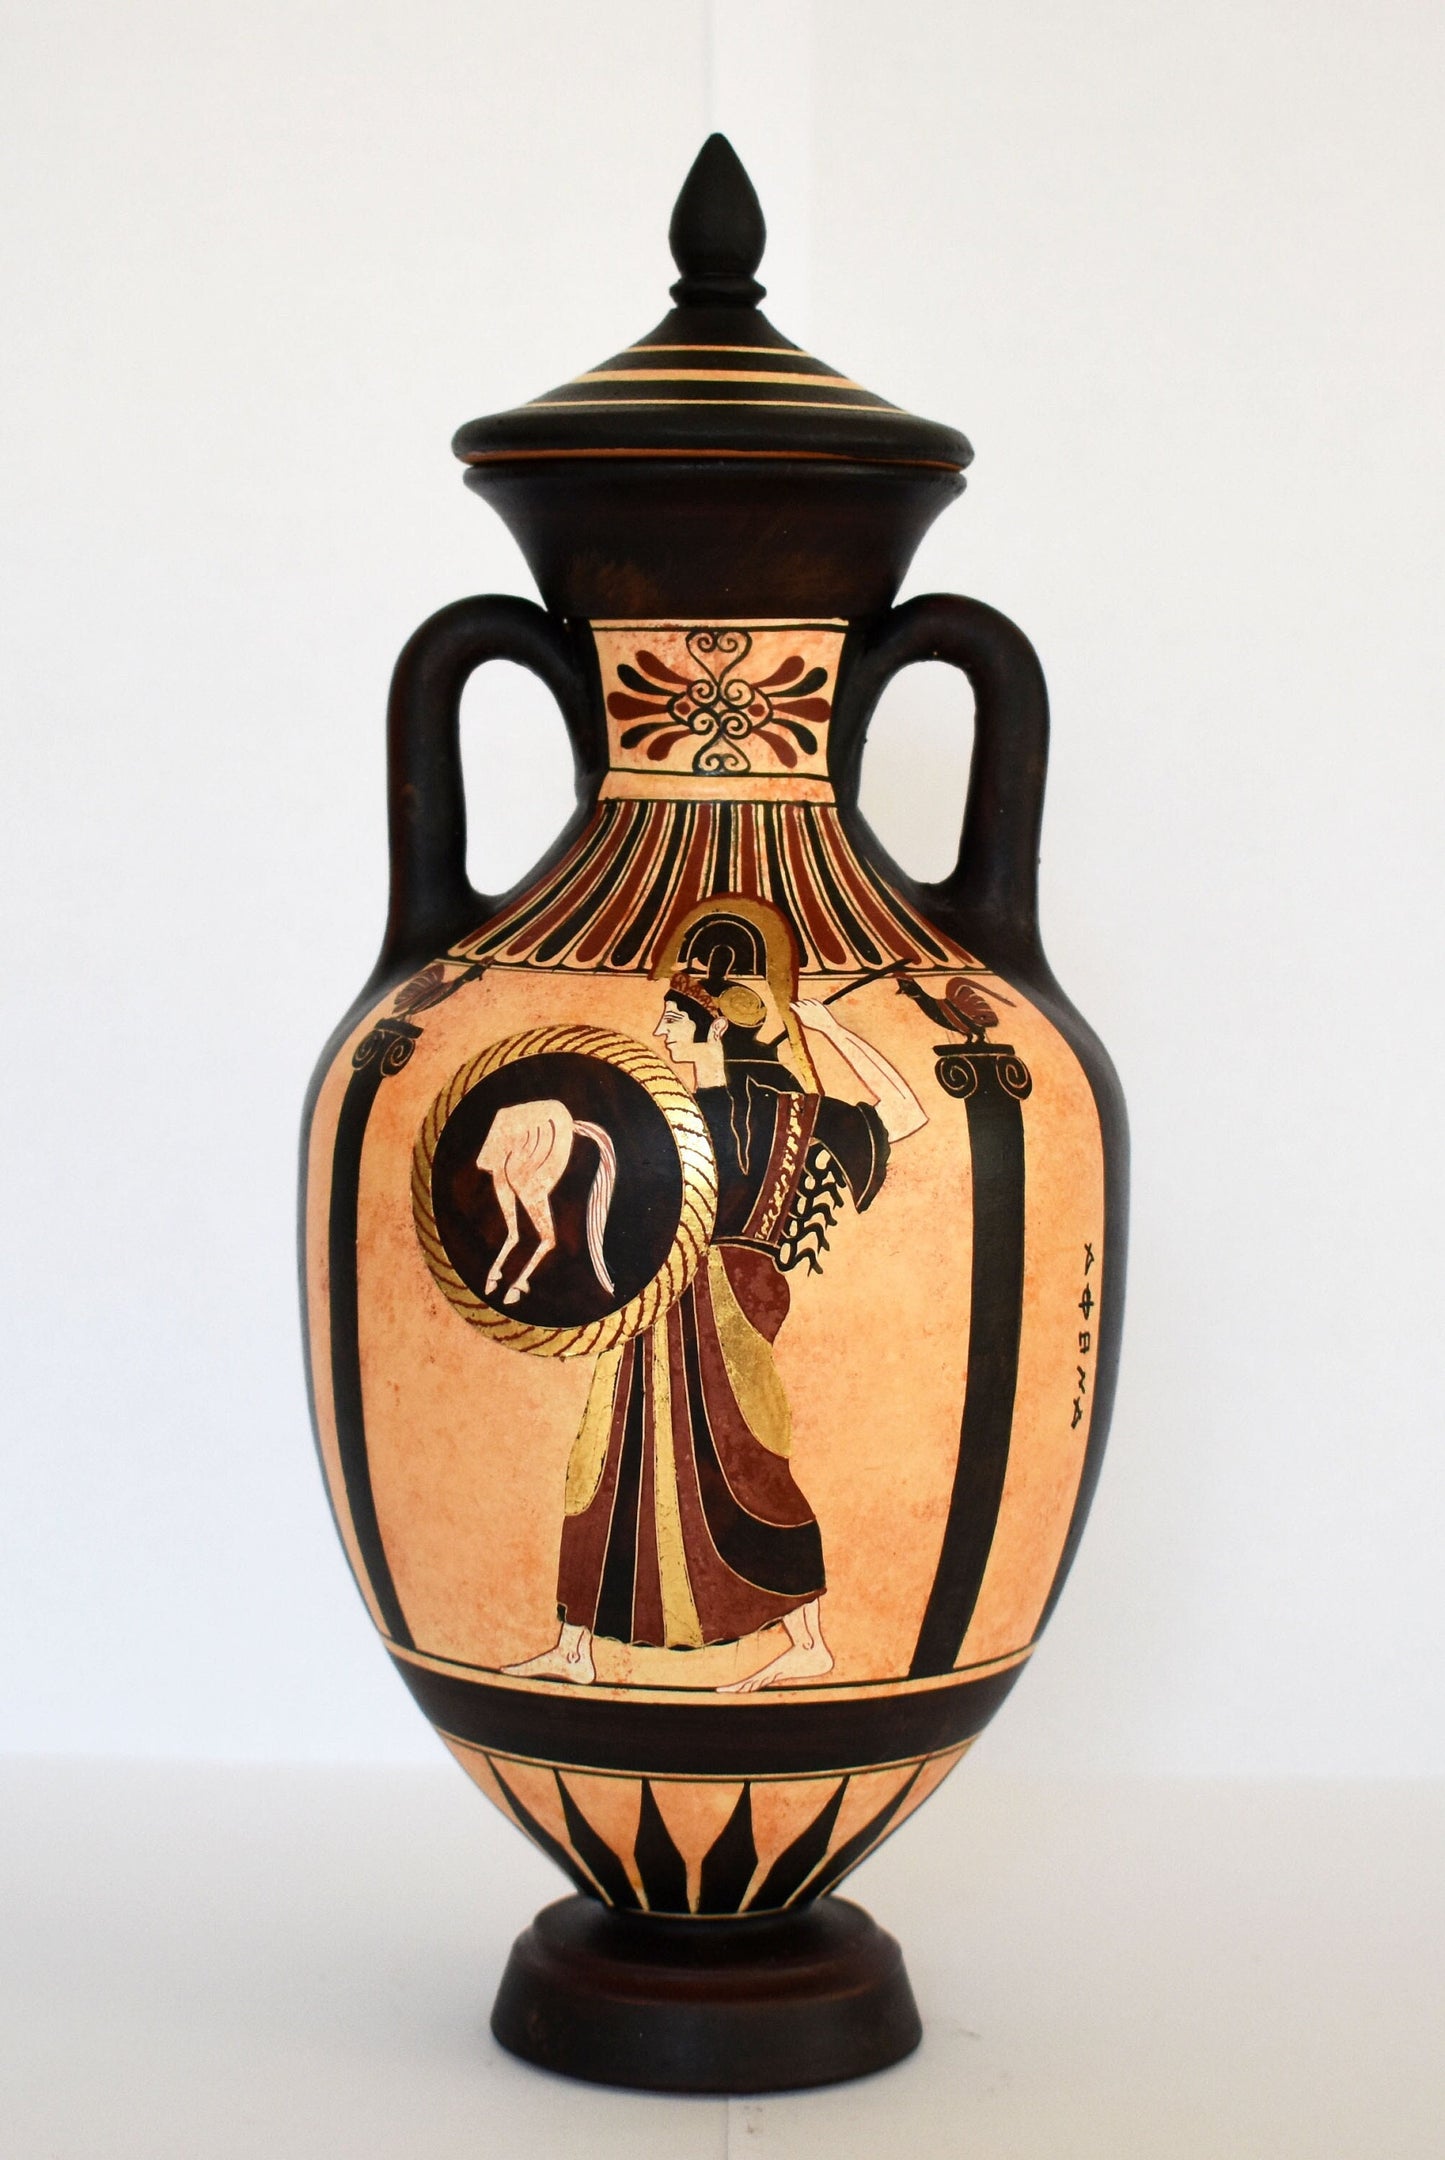 Athena - Goddess of Wisdom, Strength, Strategy - Pankration Athletes - Ancient Combat Sport - Ceramic Vase